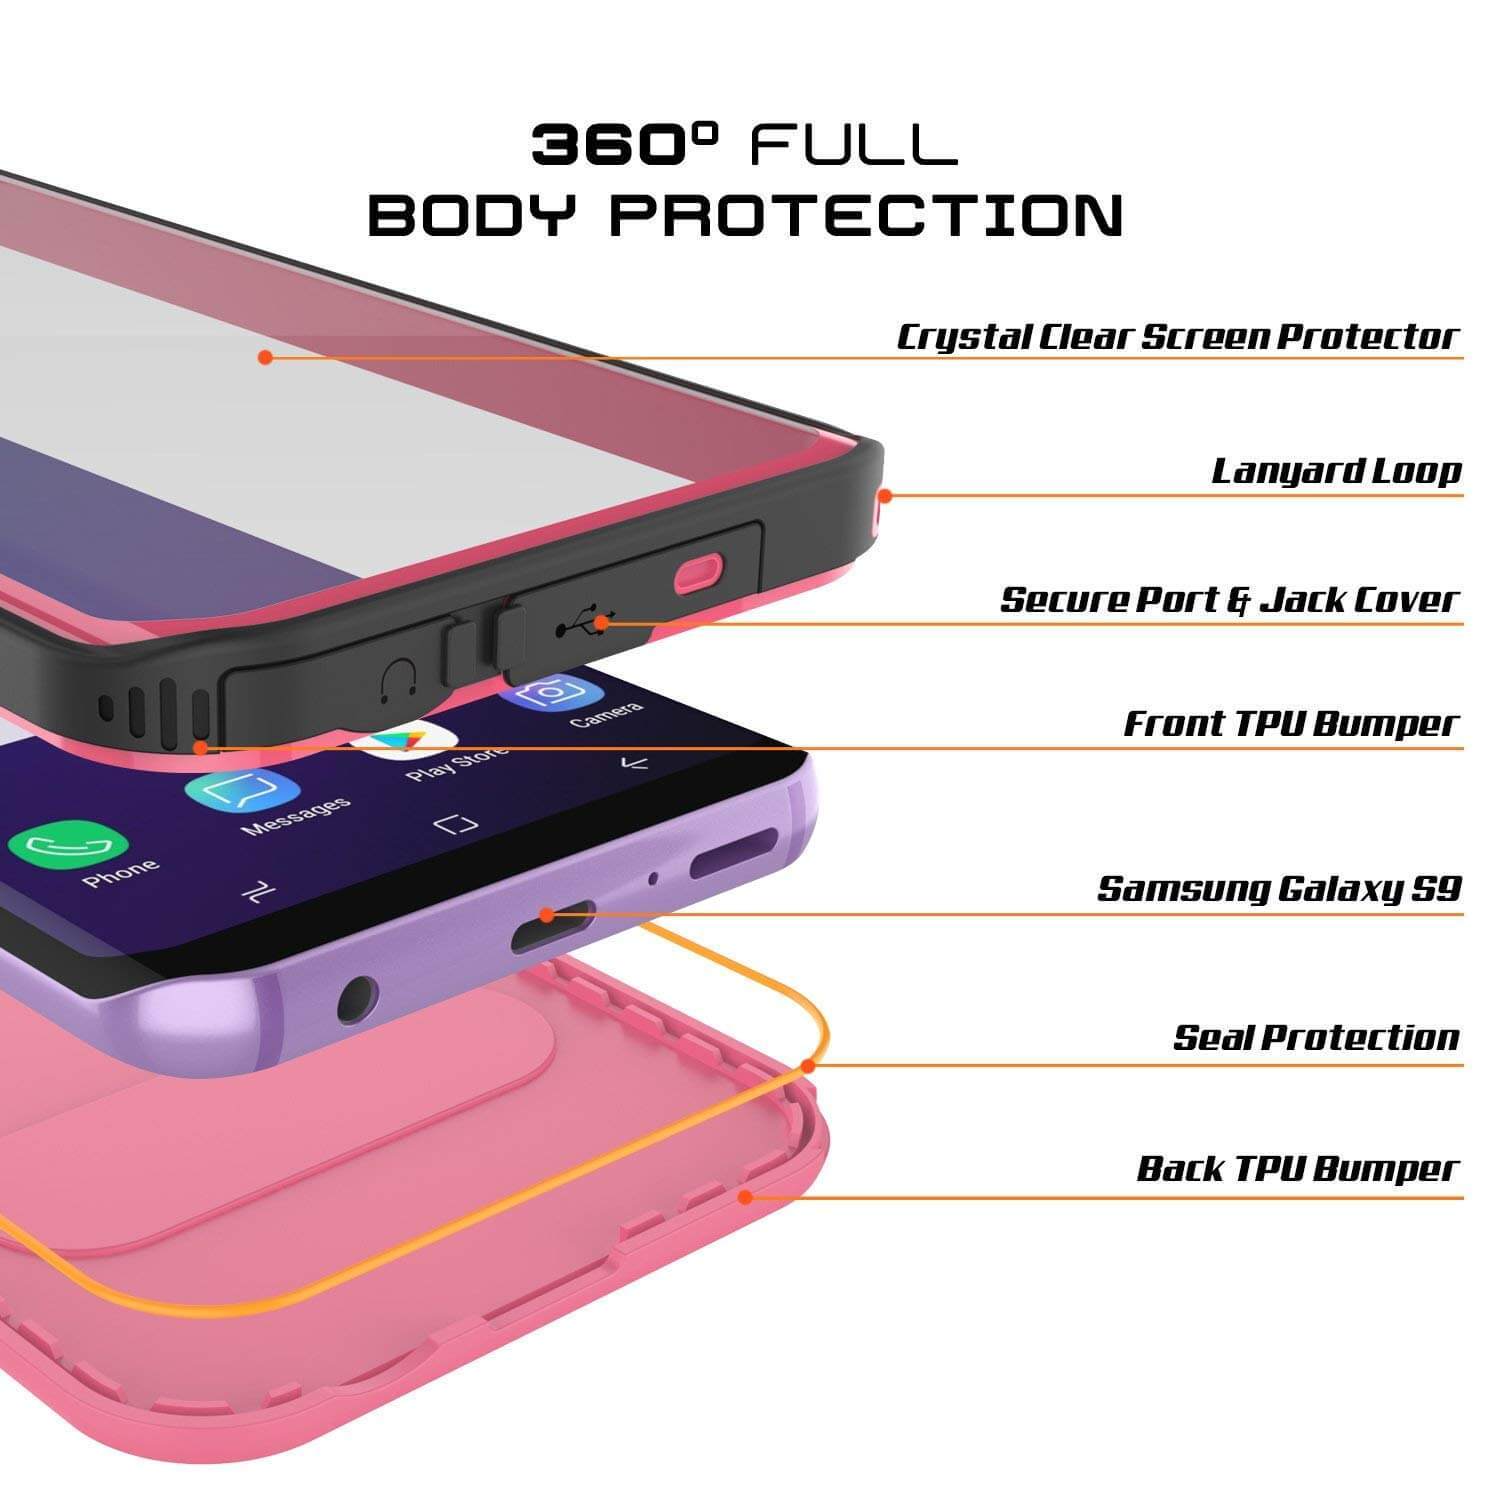 Galaxy S9 Water/Shockproof Slim Screen Protector Case [Pink]